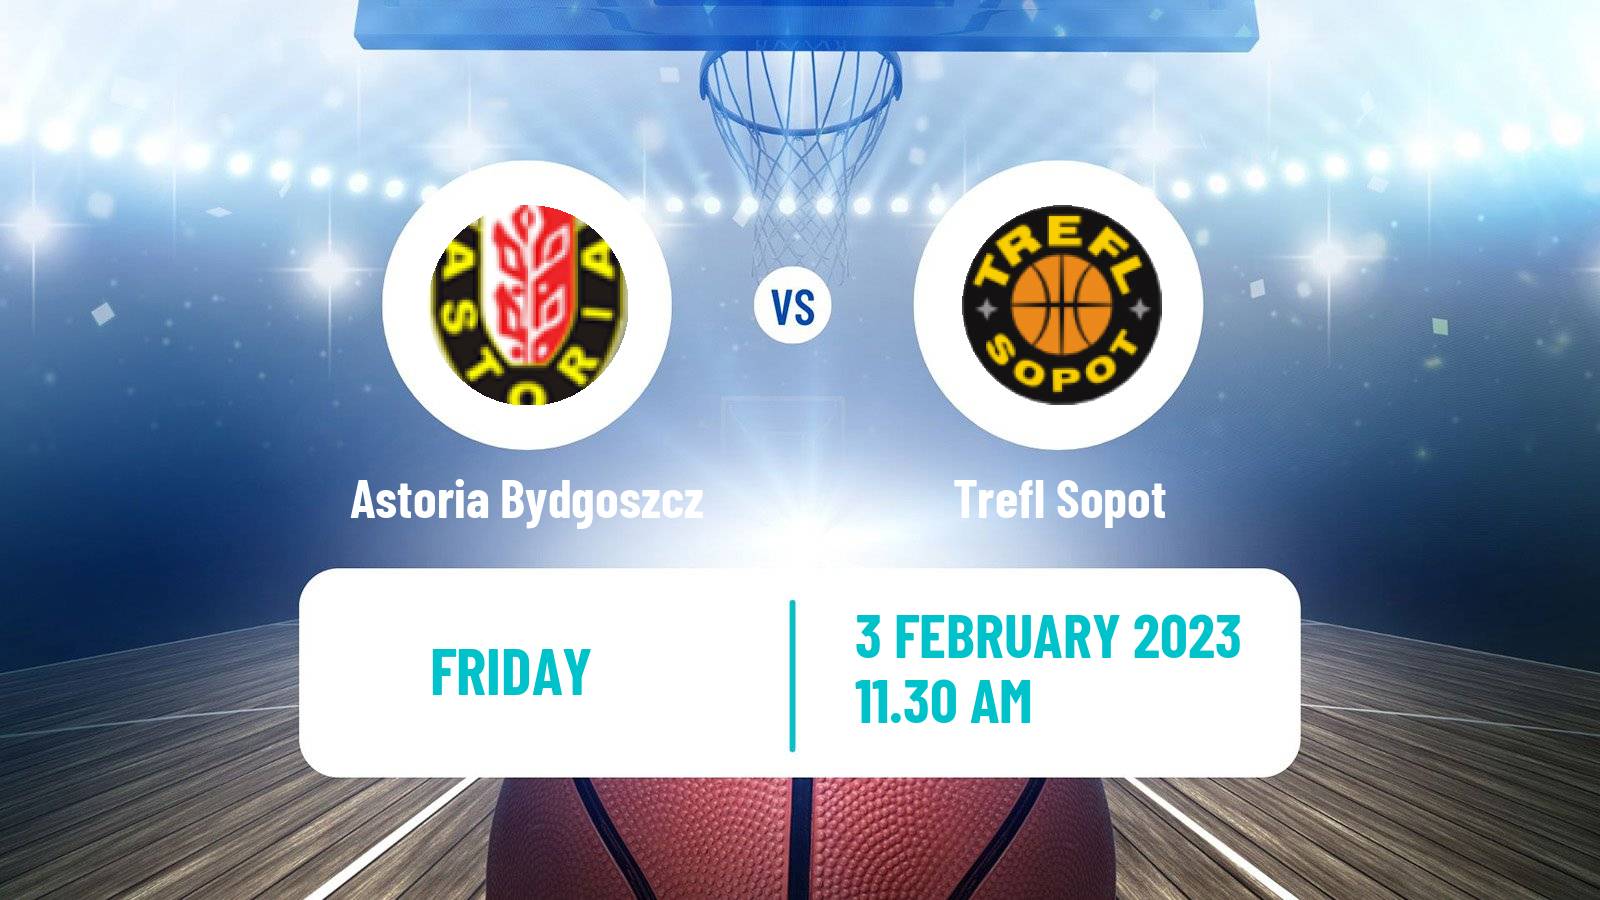 Basketball Polish Basket Liga Astoria Bydgoszcz - Trefl Sopot